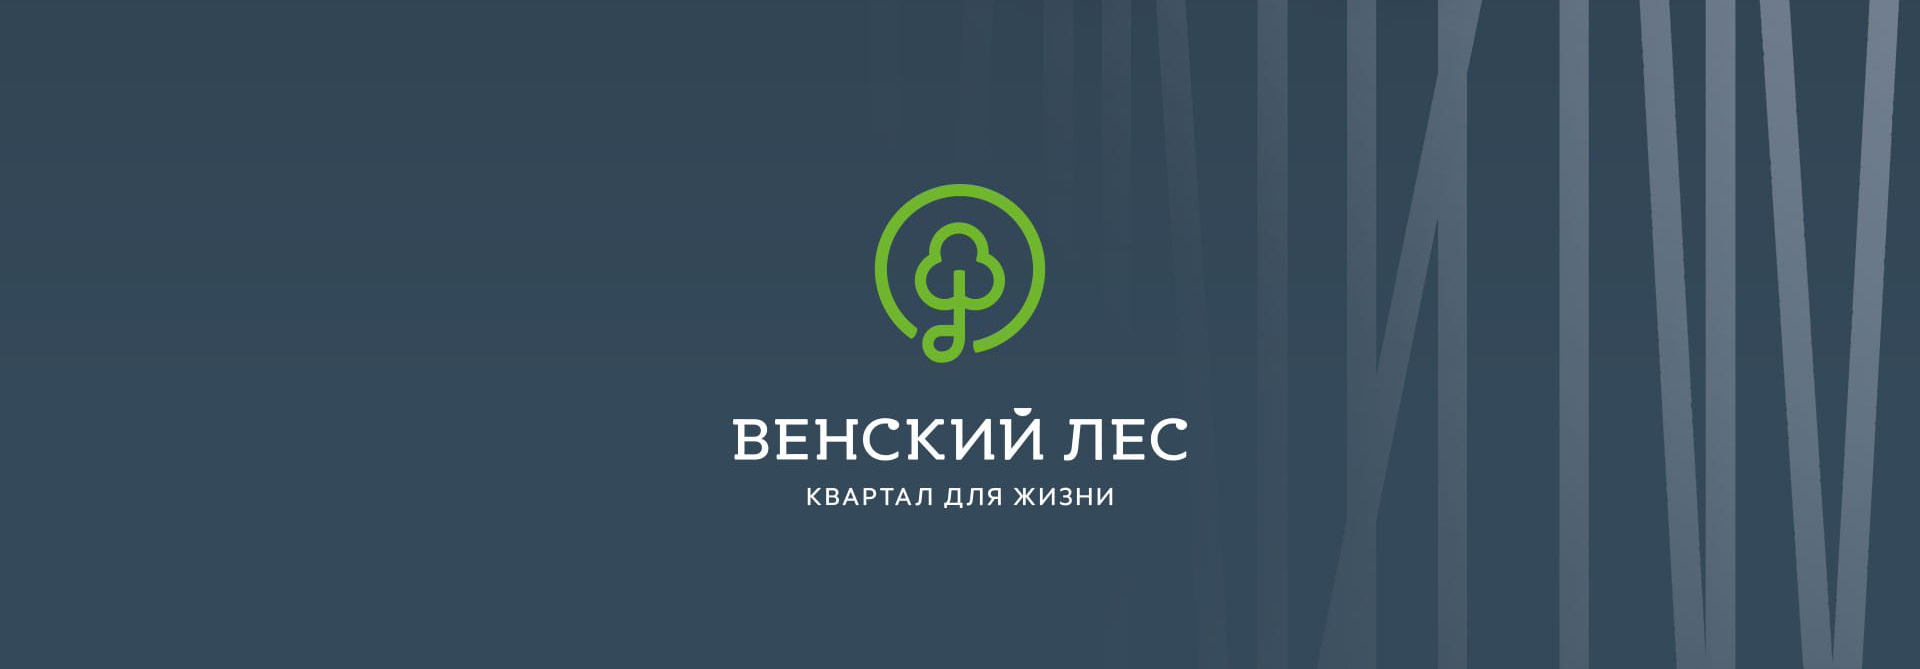 Логотип "Венский Лес"